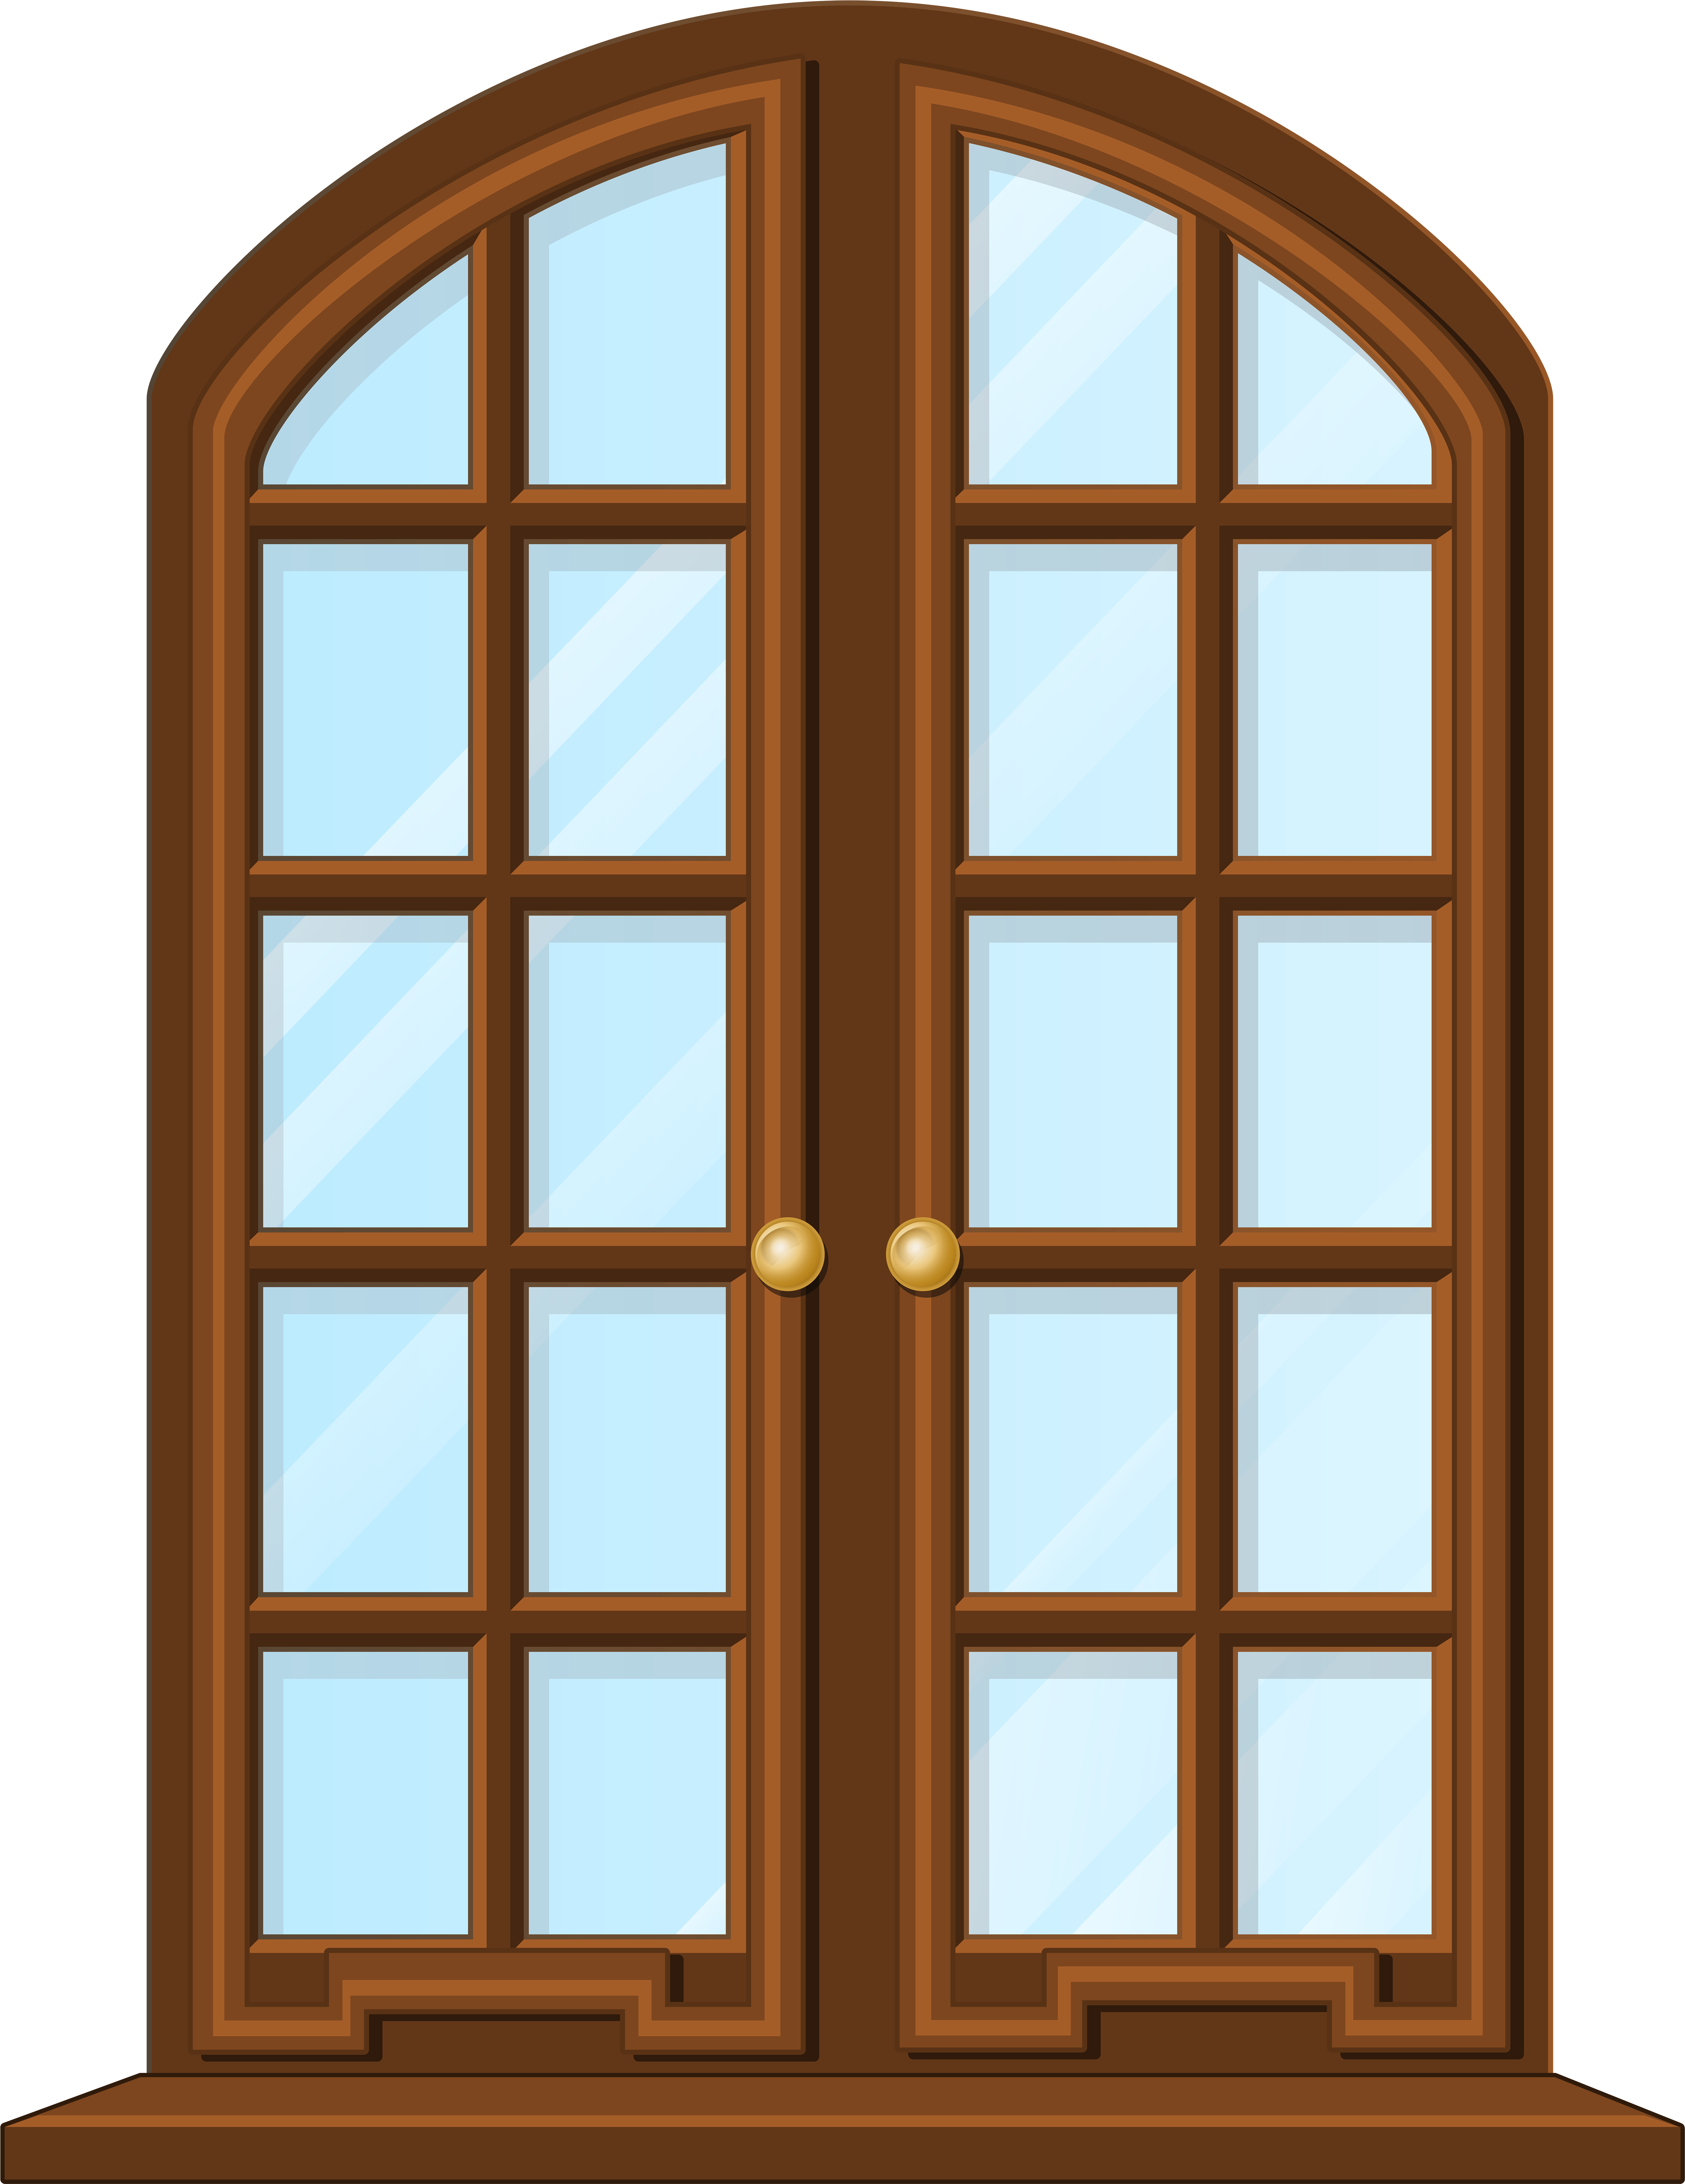 Clip Art House Windows, Clipart House Windows, Clipart - Clip Art House Windows, Clipart House Windows, Clipart (6199x8000)